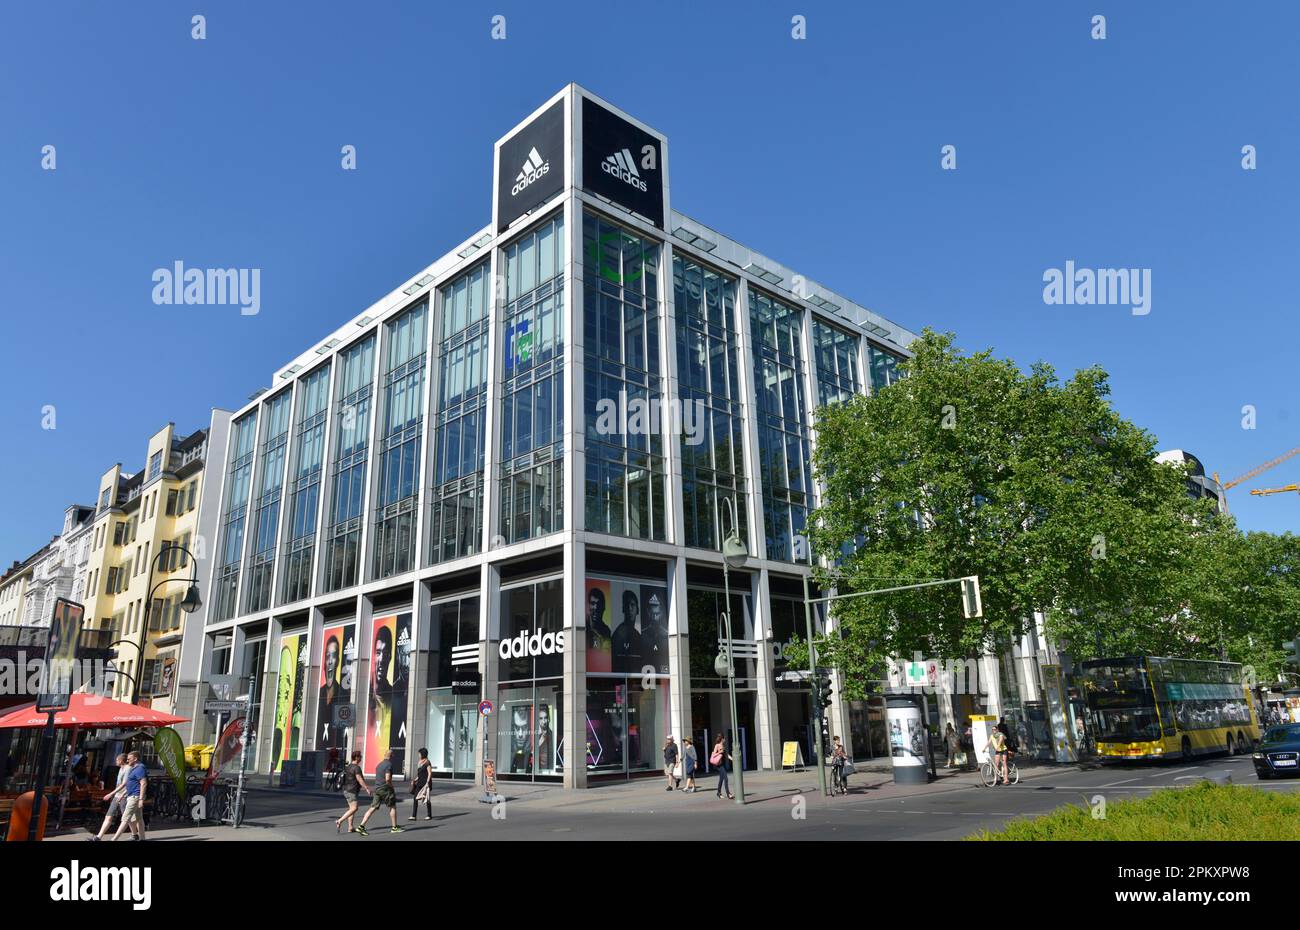 Adidas shop berlin germany -Fotos und -Bildmaterial in hoher Auflösung –  Alamy